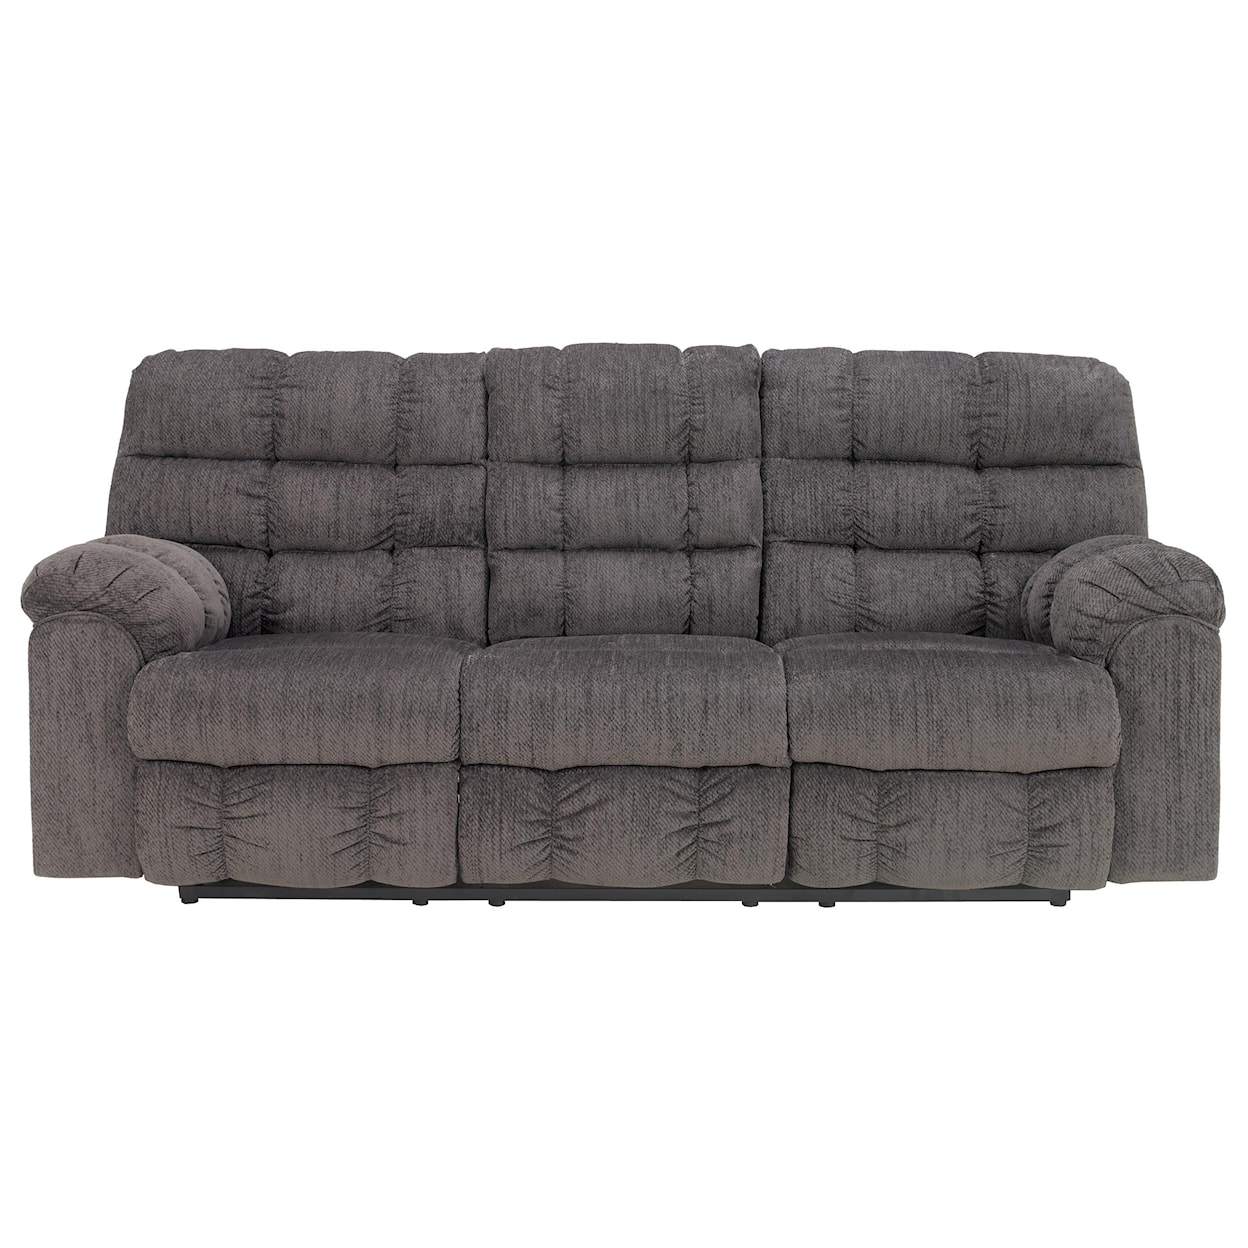 StyleLine Acieona - Slate Reclining Sofa with Drop Down Table